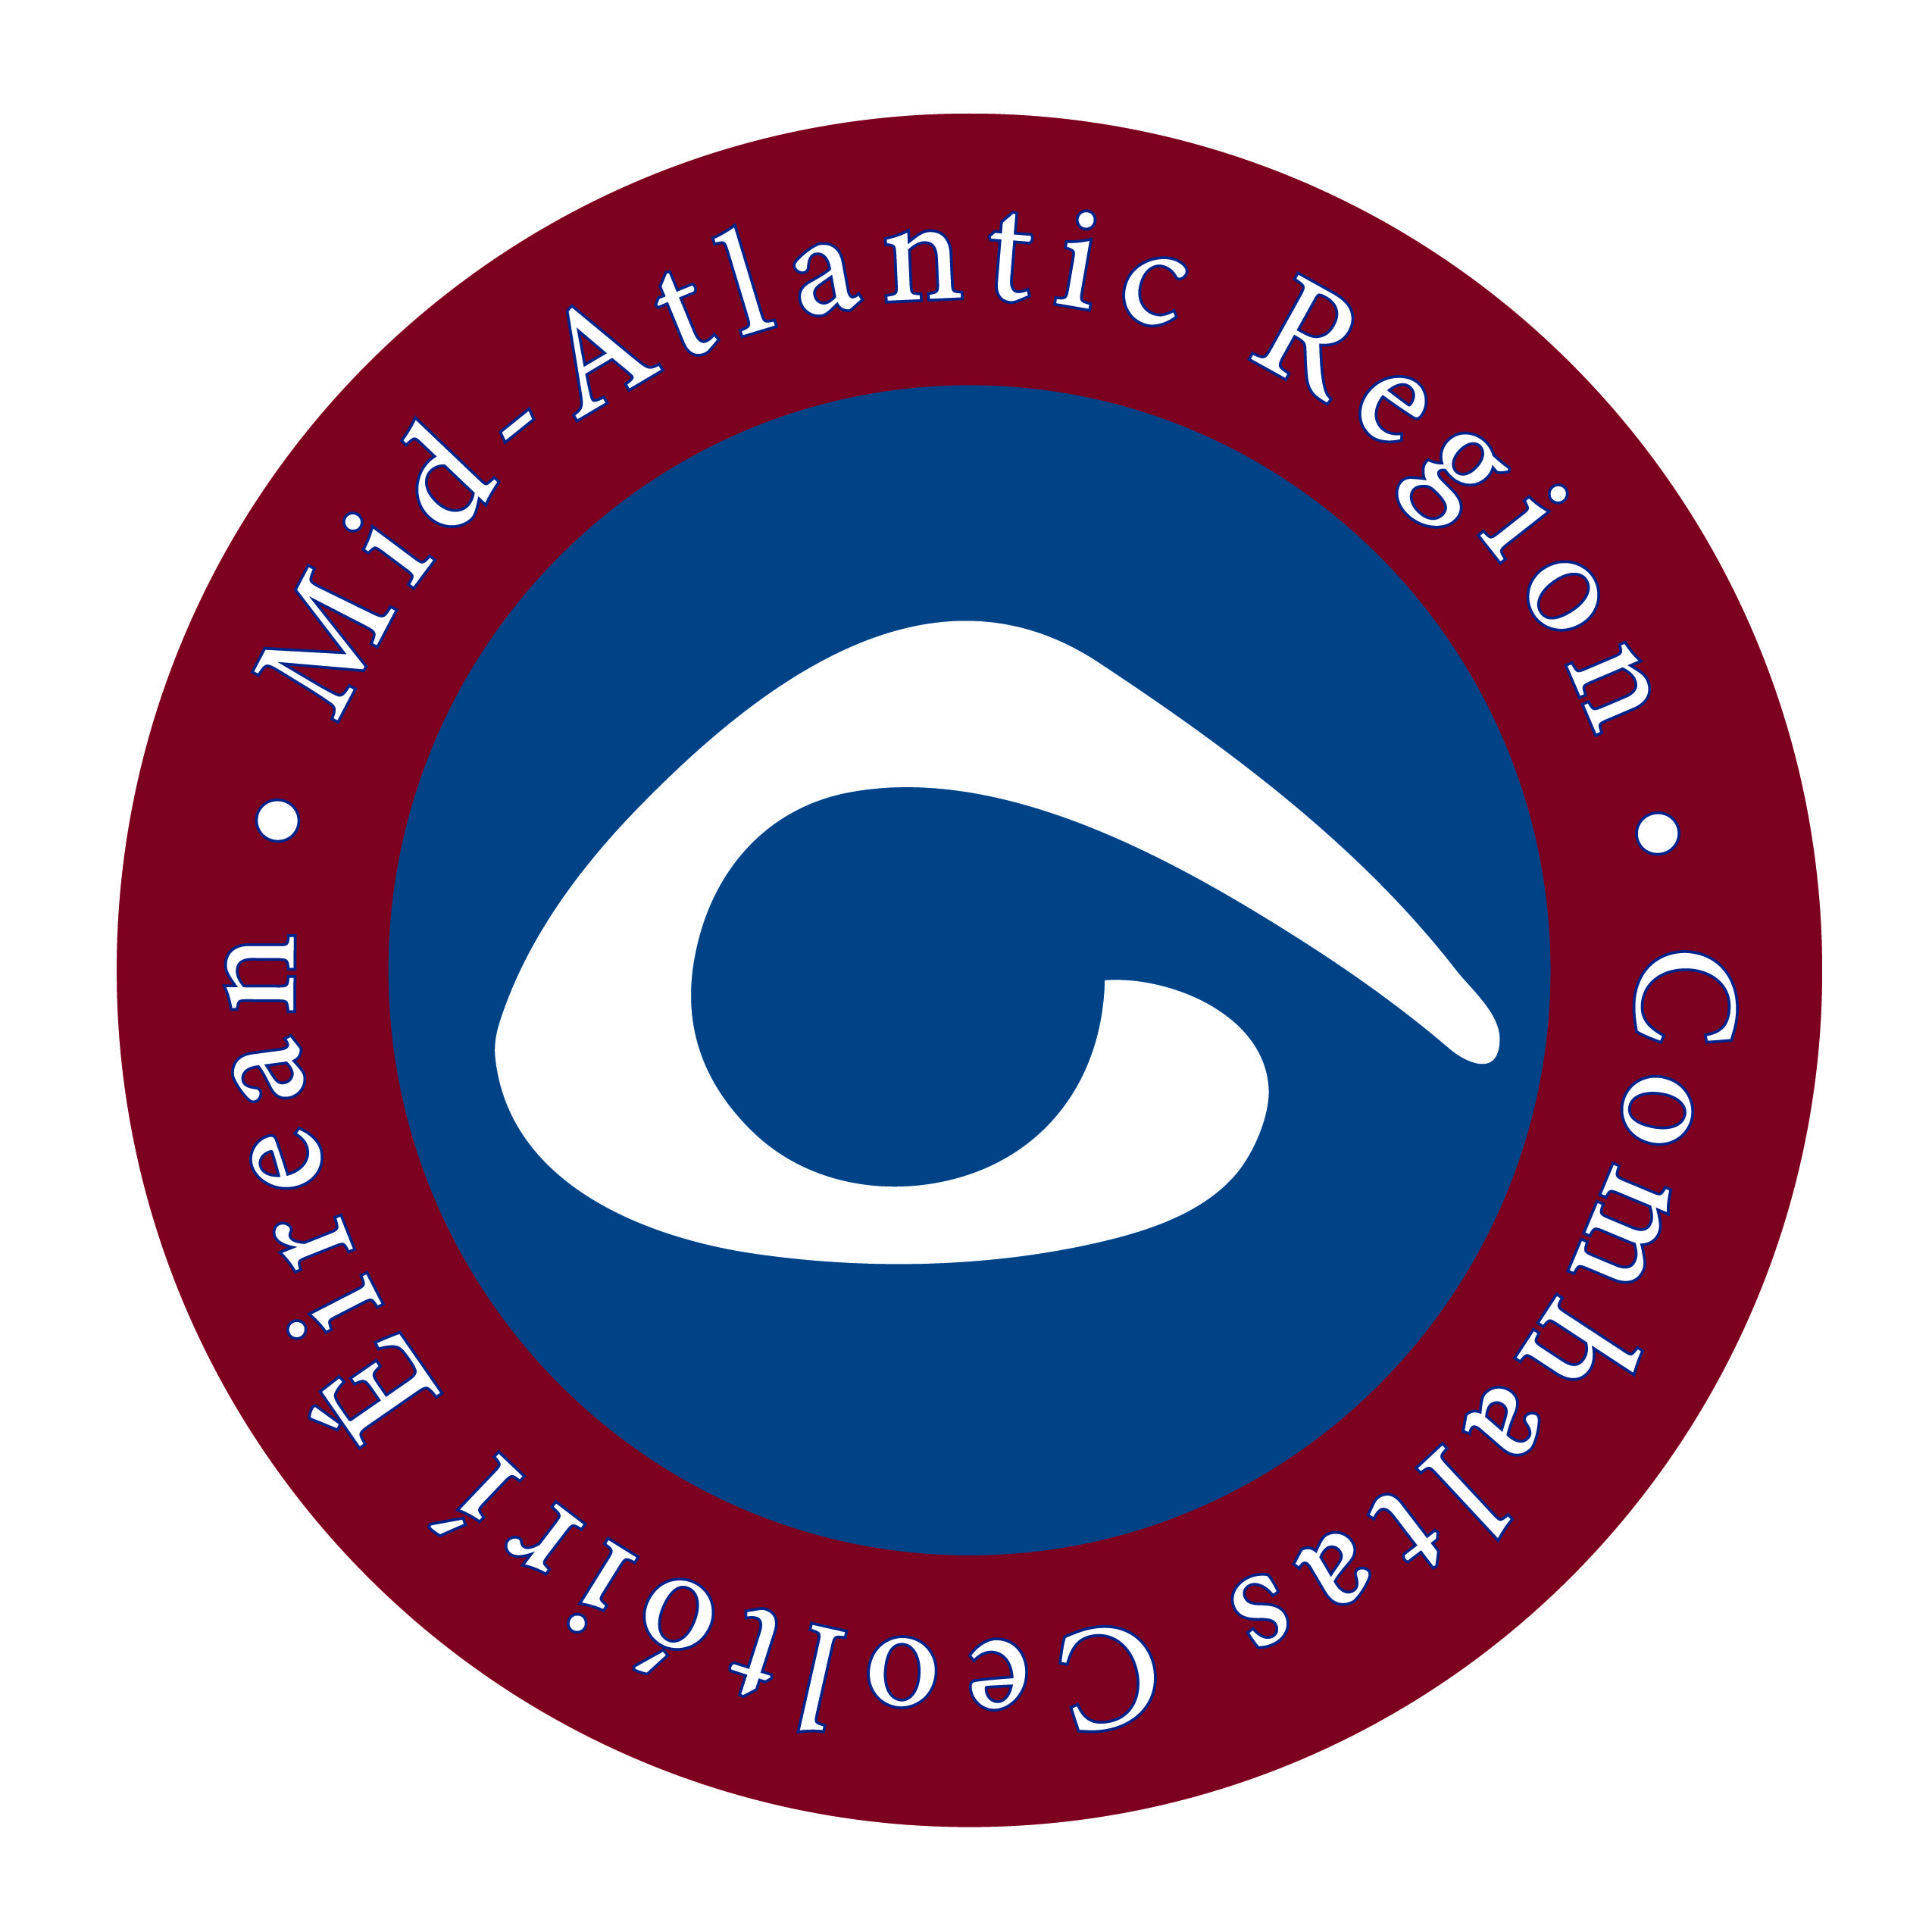 Mid atlantic cce logo